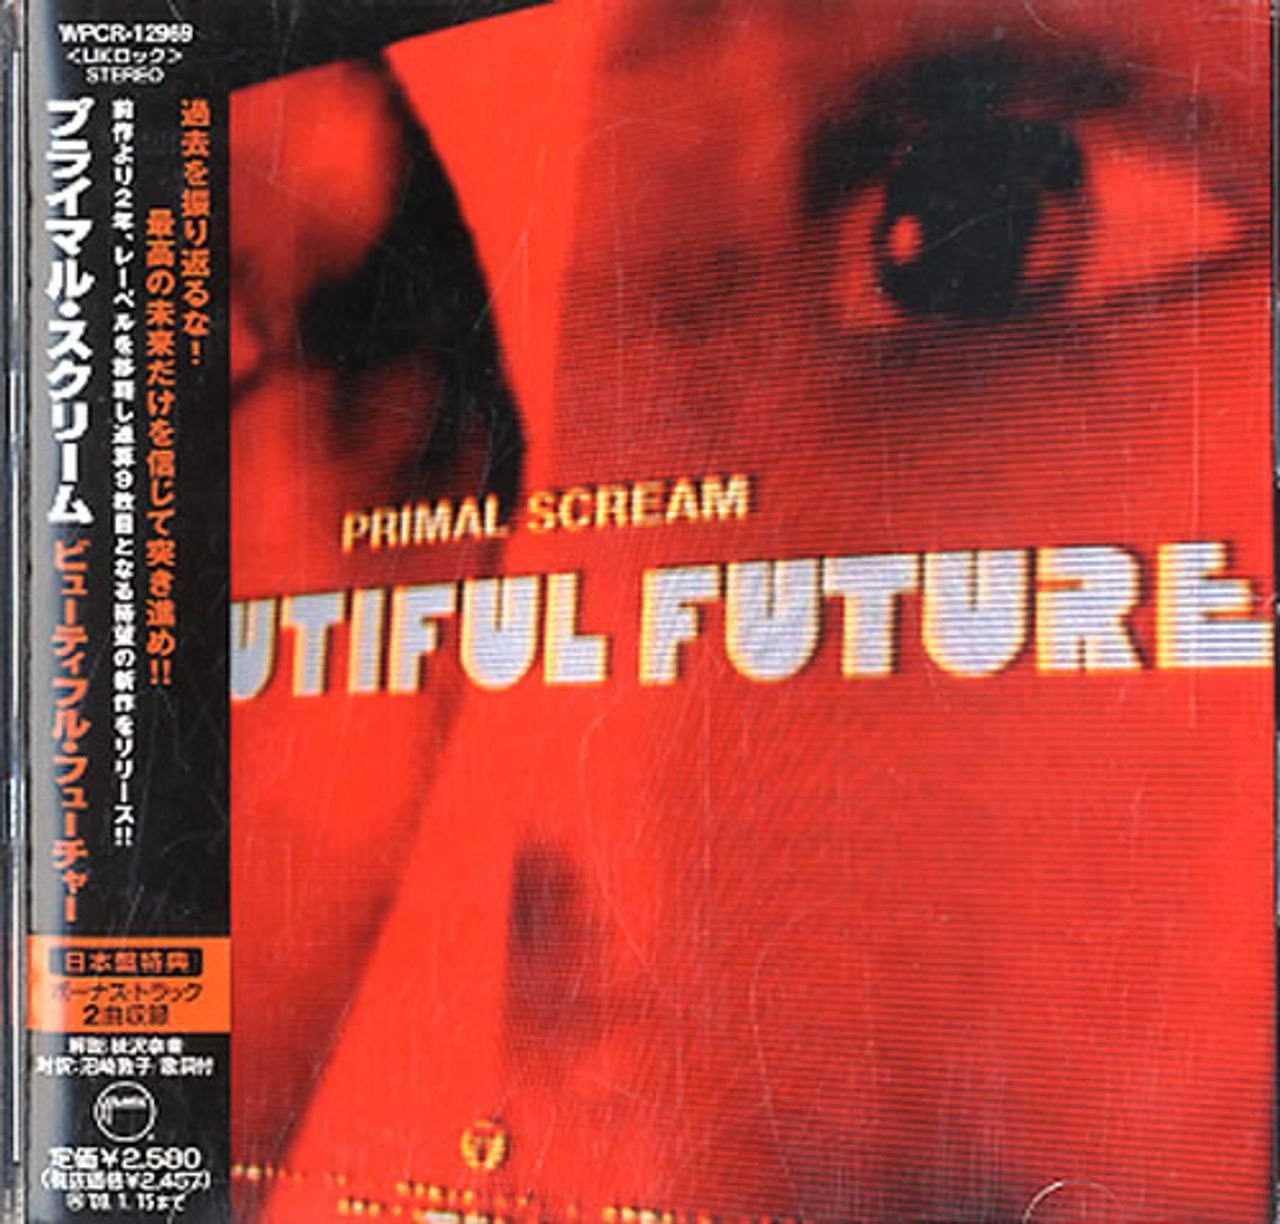 Primal Scream Beautiful Future Japanese Promo CD album (CDLP) WPCR-12969